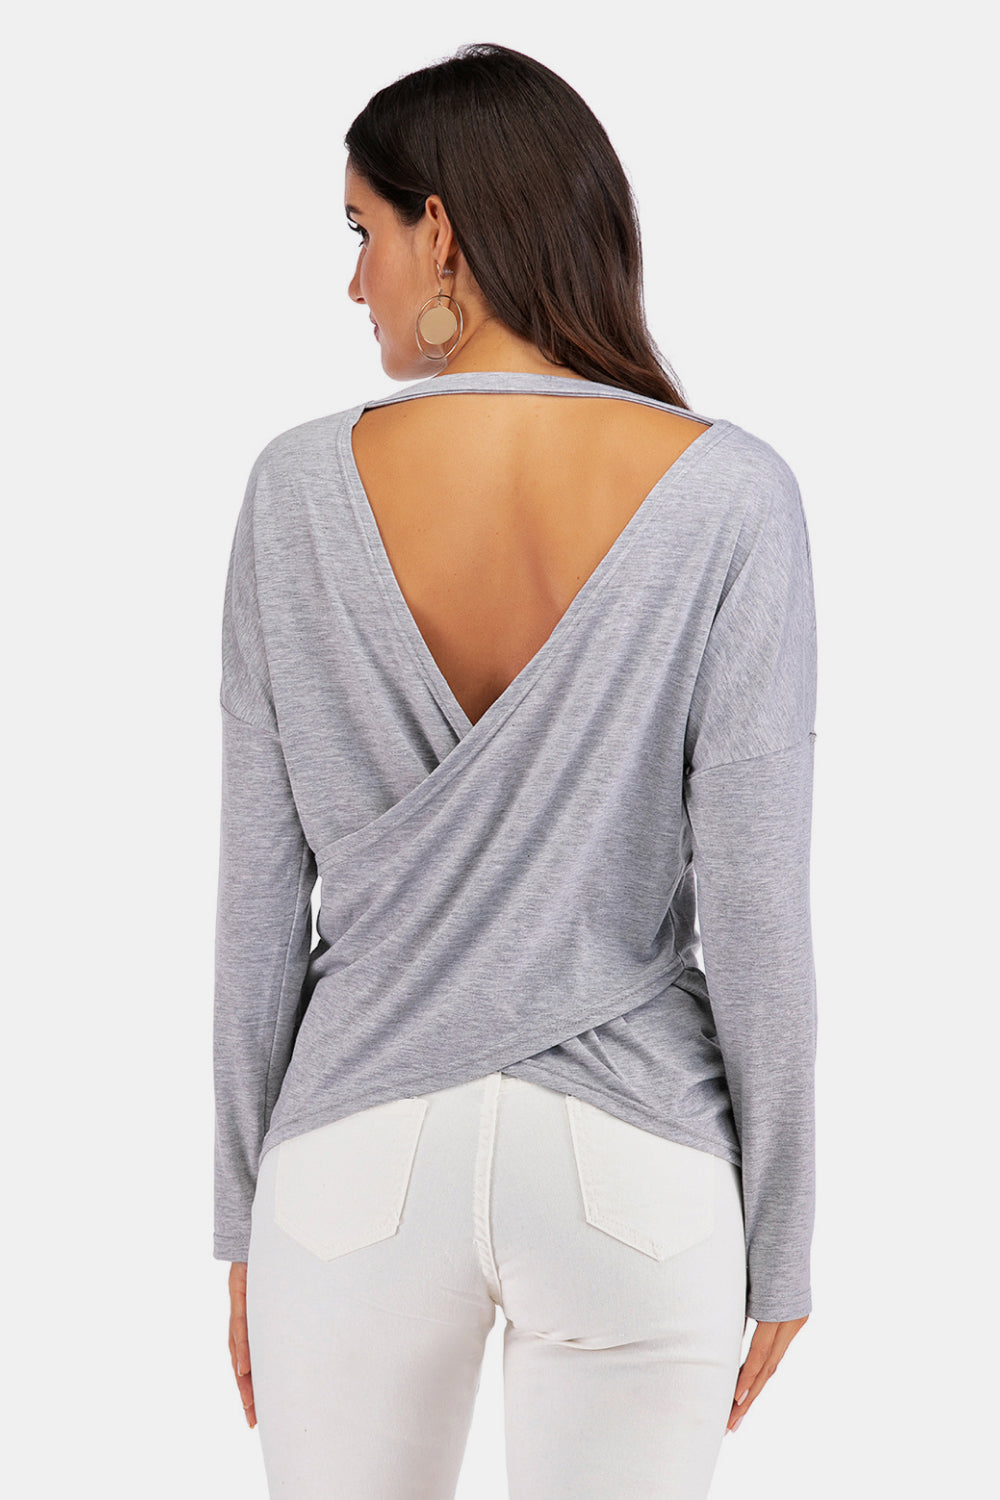 Cold-Shoulder Asymmetrical Neck Sweatshirt - Sweatshirts & Hoodies - FITGGINS